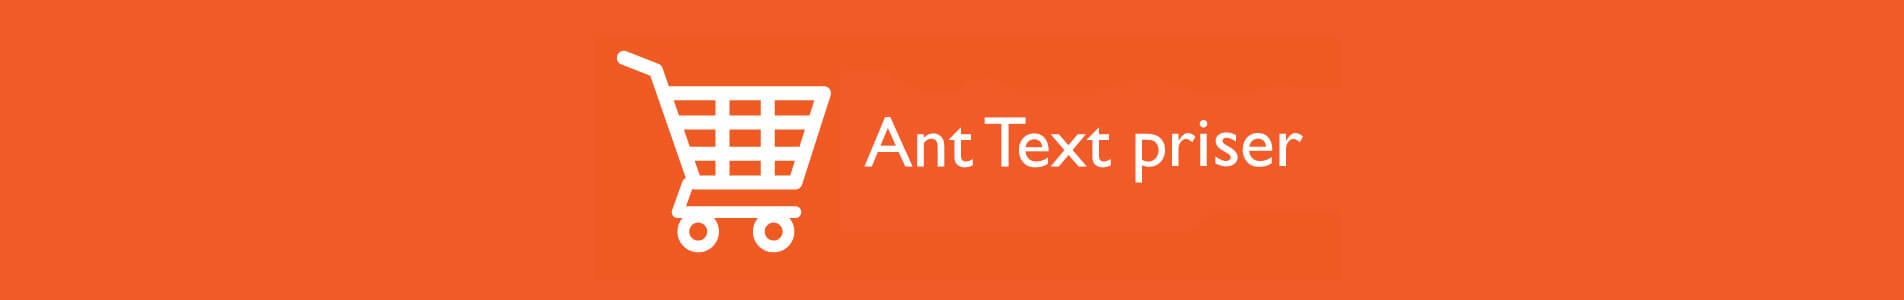 Header Ant Text priser